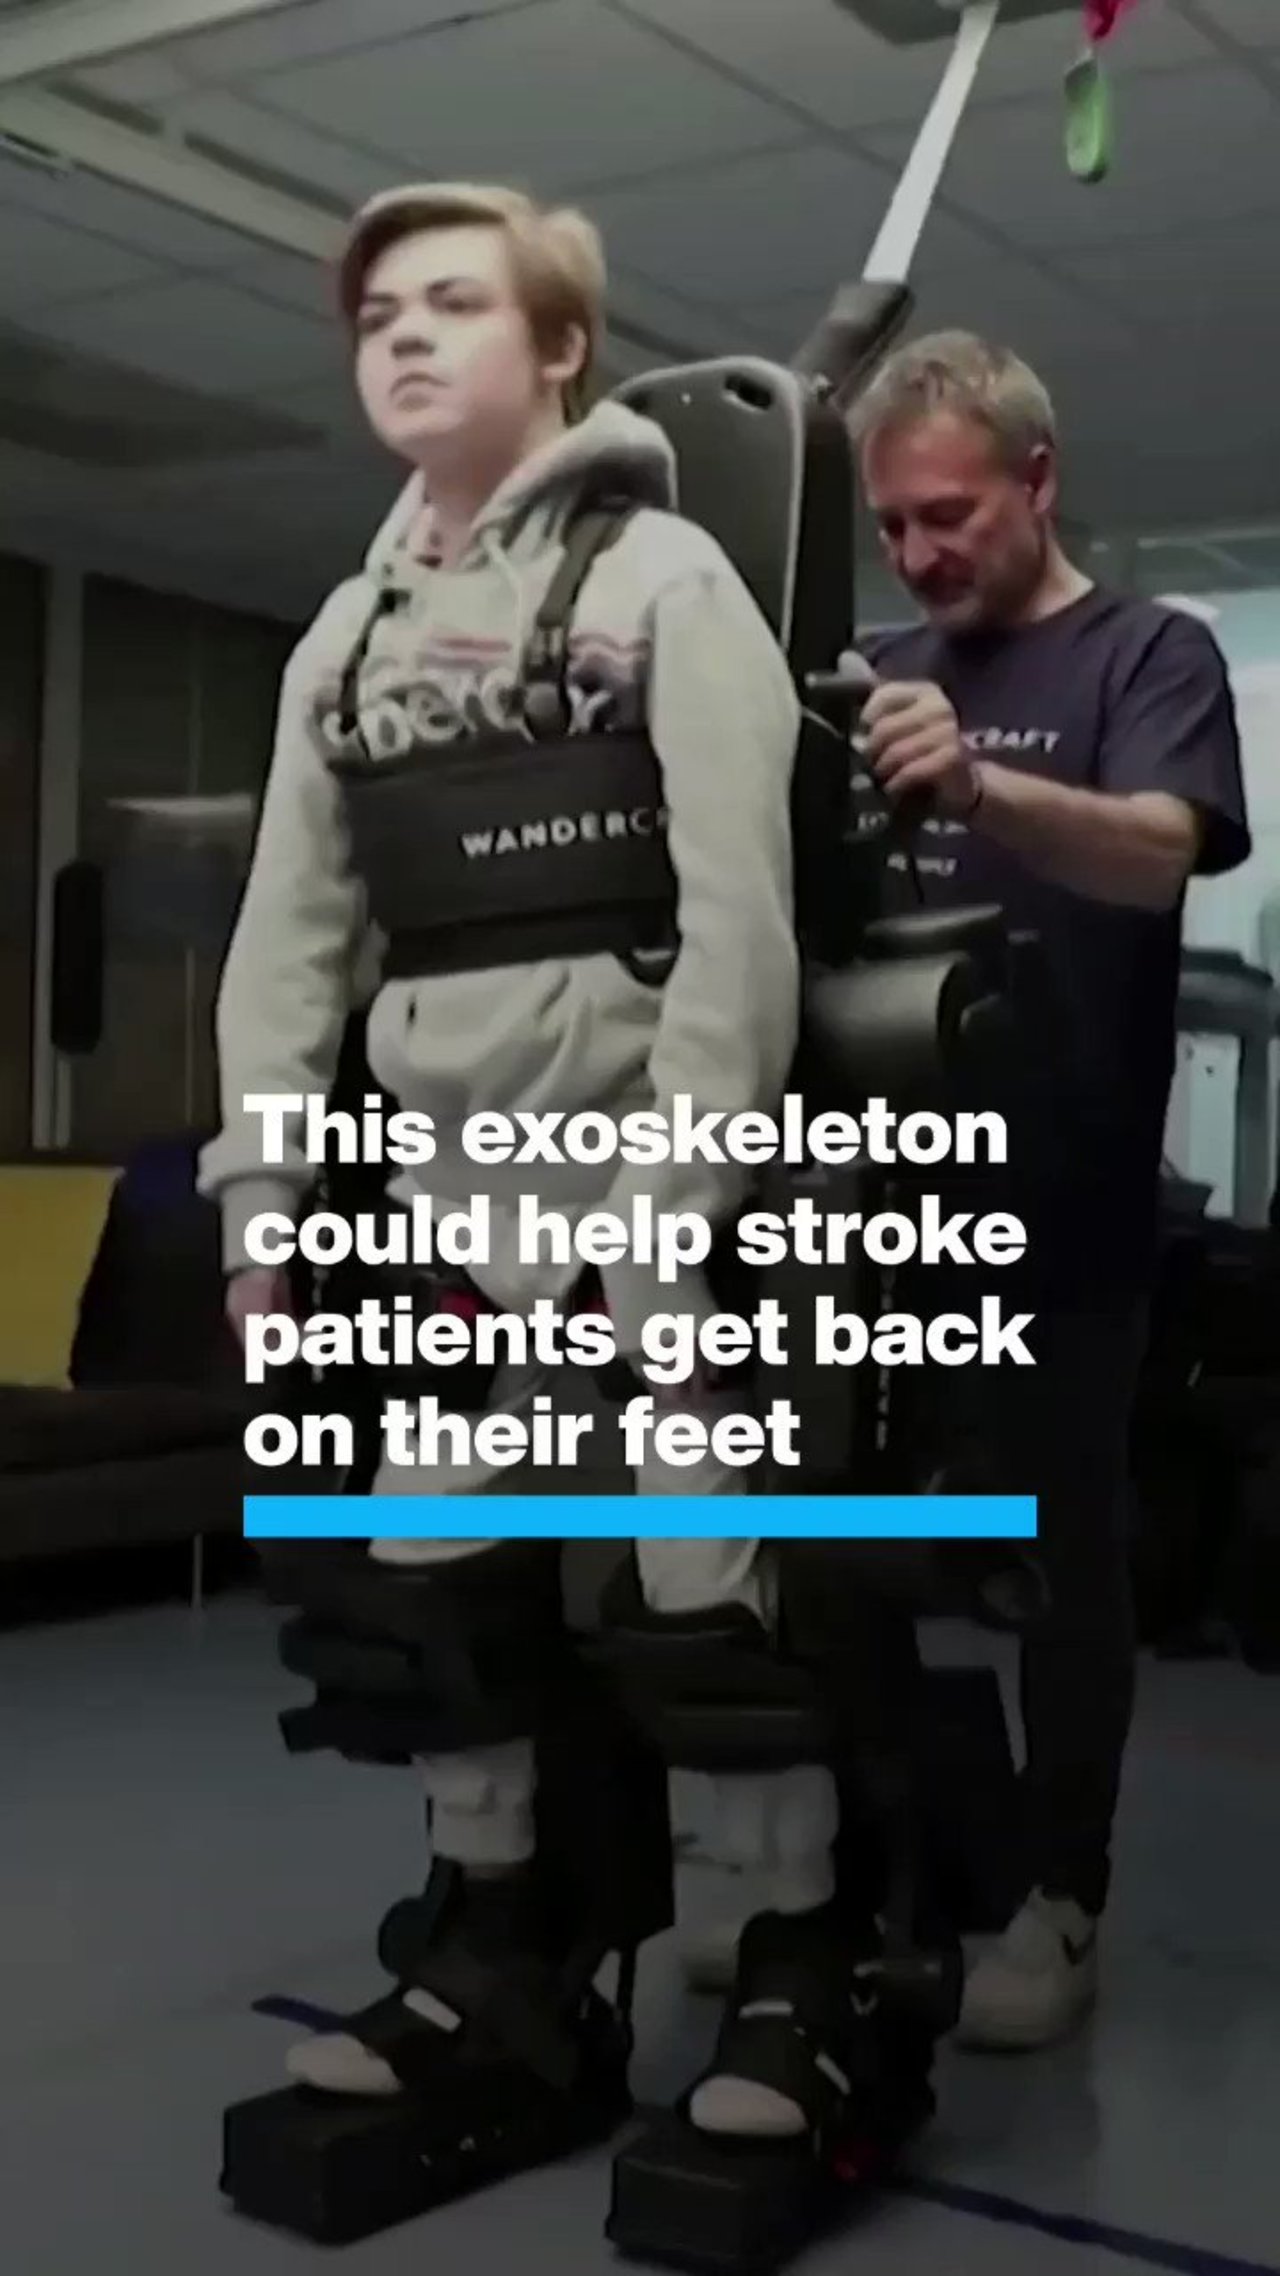 This robot is helping stroke patients learn to walk again.  #Robotics #Robots #healthcare #AI #Health #100DaysOfCode #IoT #5G #HealthTech #Deeplearning #TechForGood #MachineLearning #Artificalintelligence #Tech4Good #innovation #Bigdata #Algorithms #FutureOfWork #Socialmedia https://t.co/X1x0a51OBy